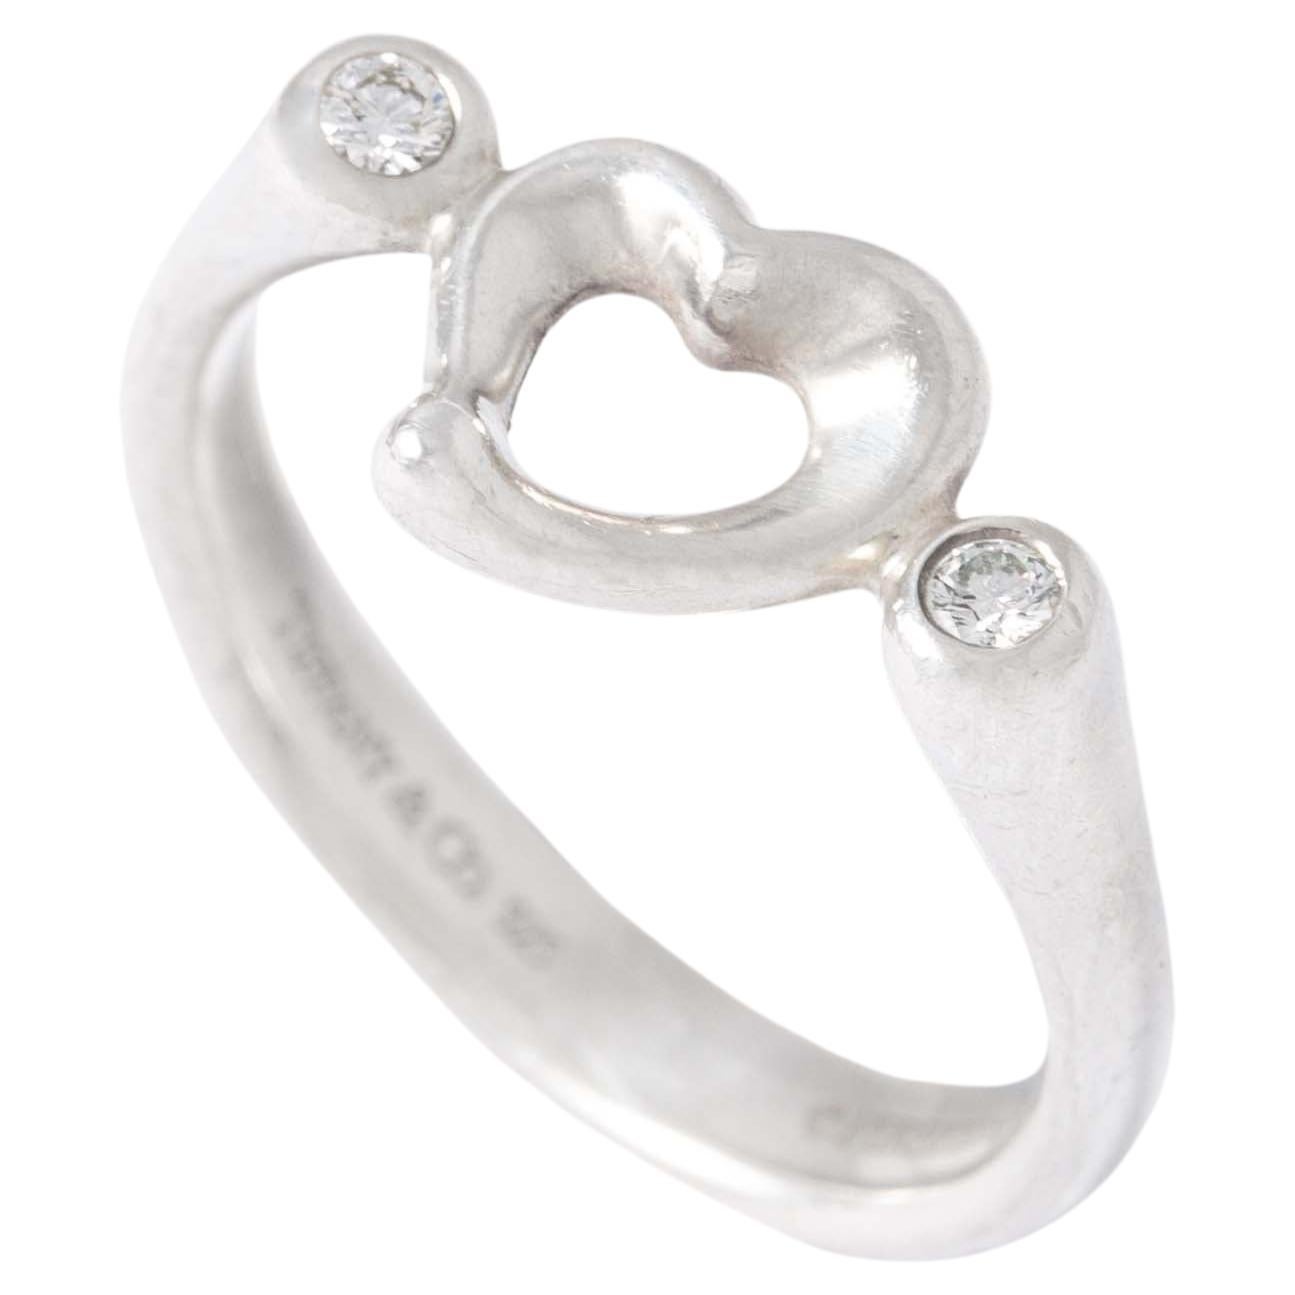 Tiffany's und Co. Peretti Collection Silber Ring